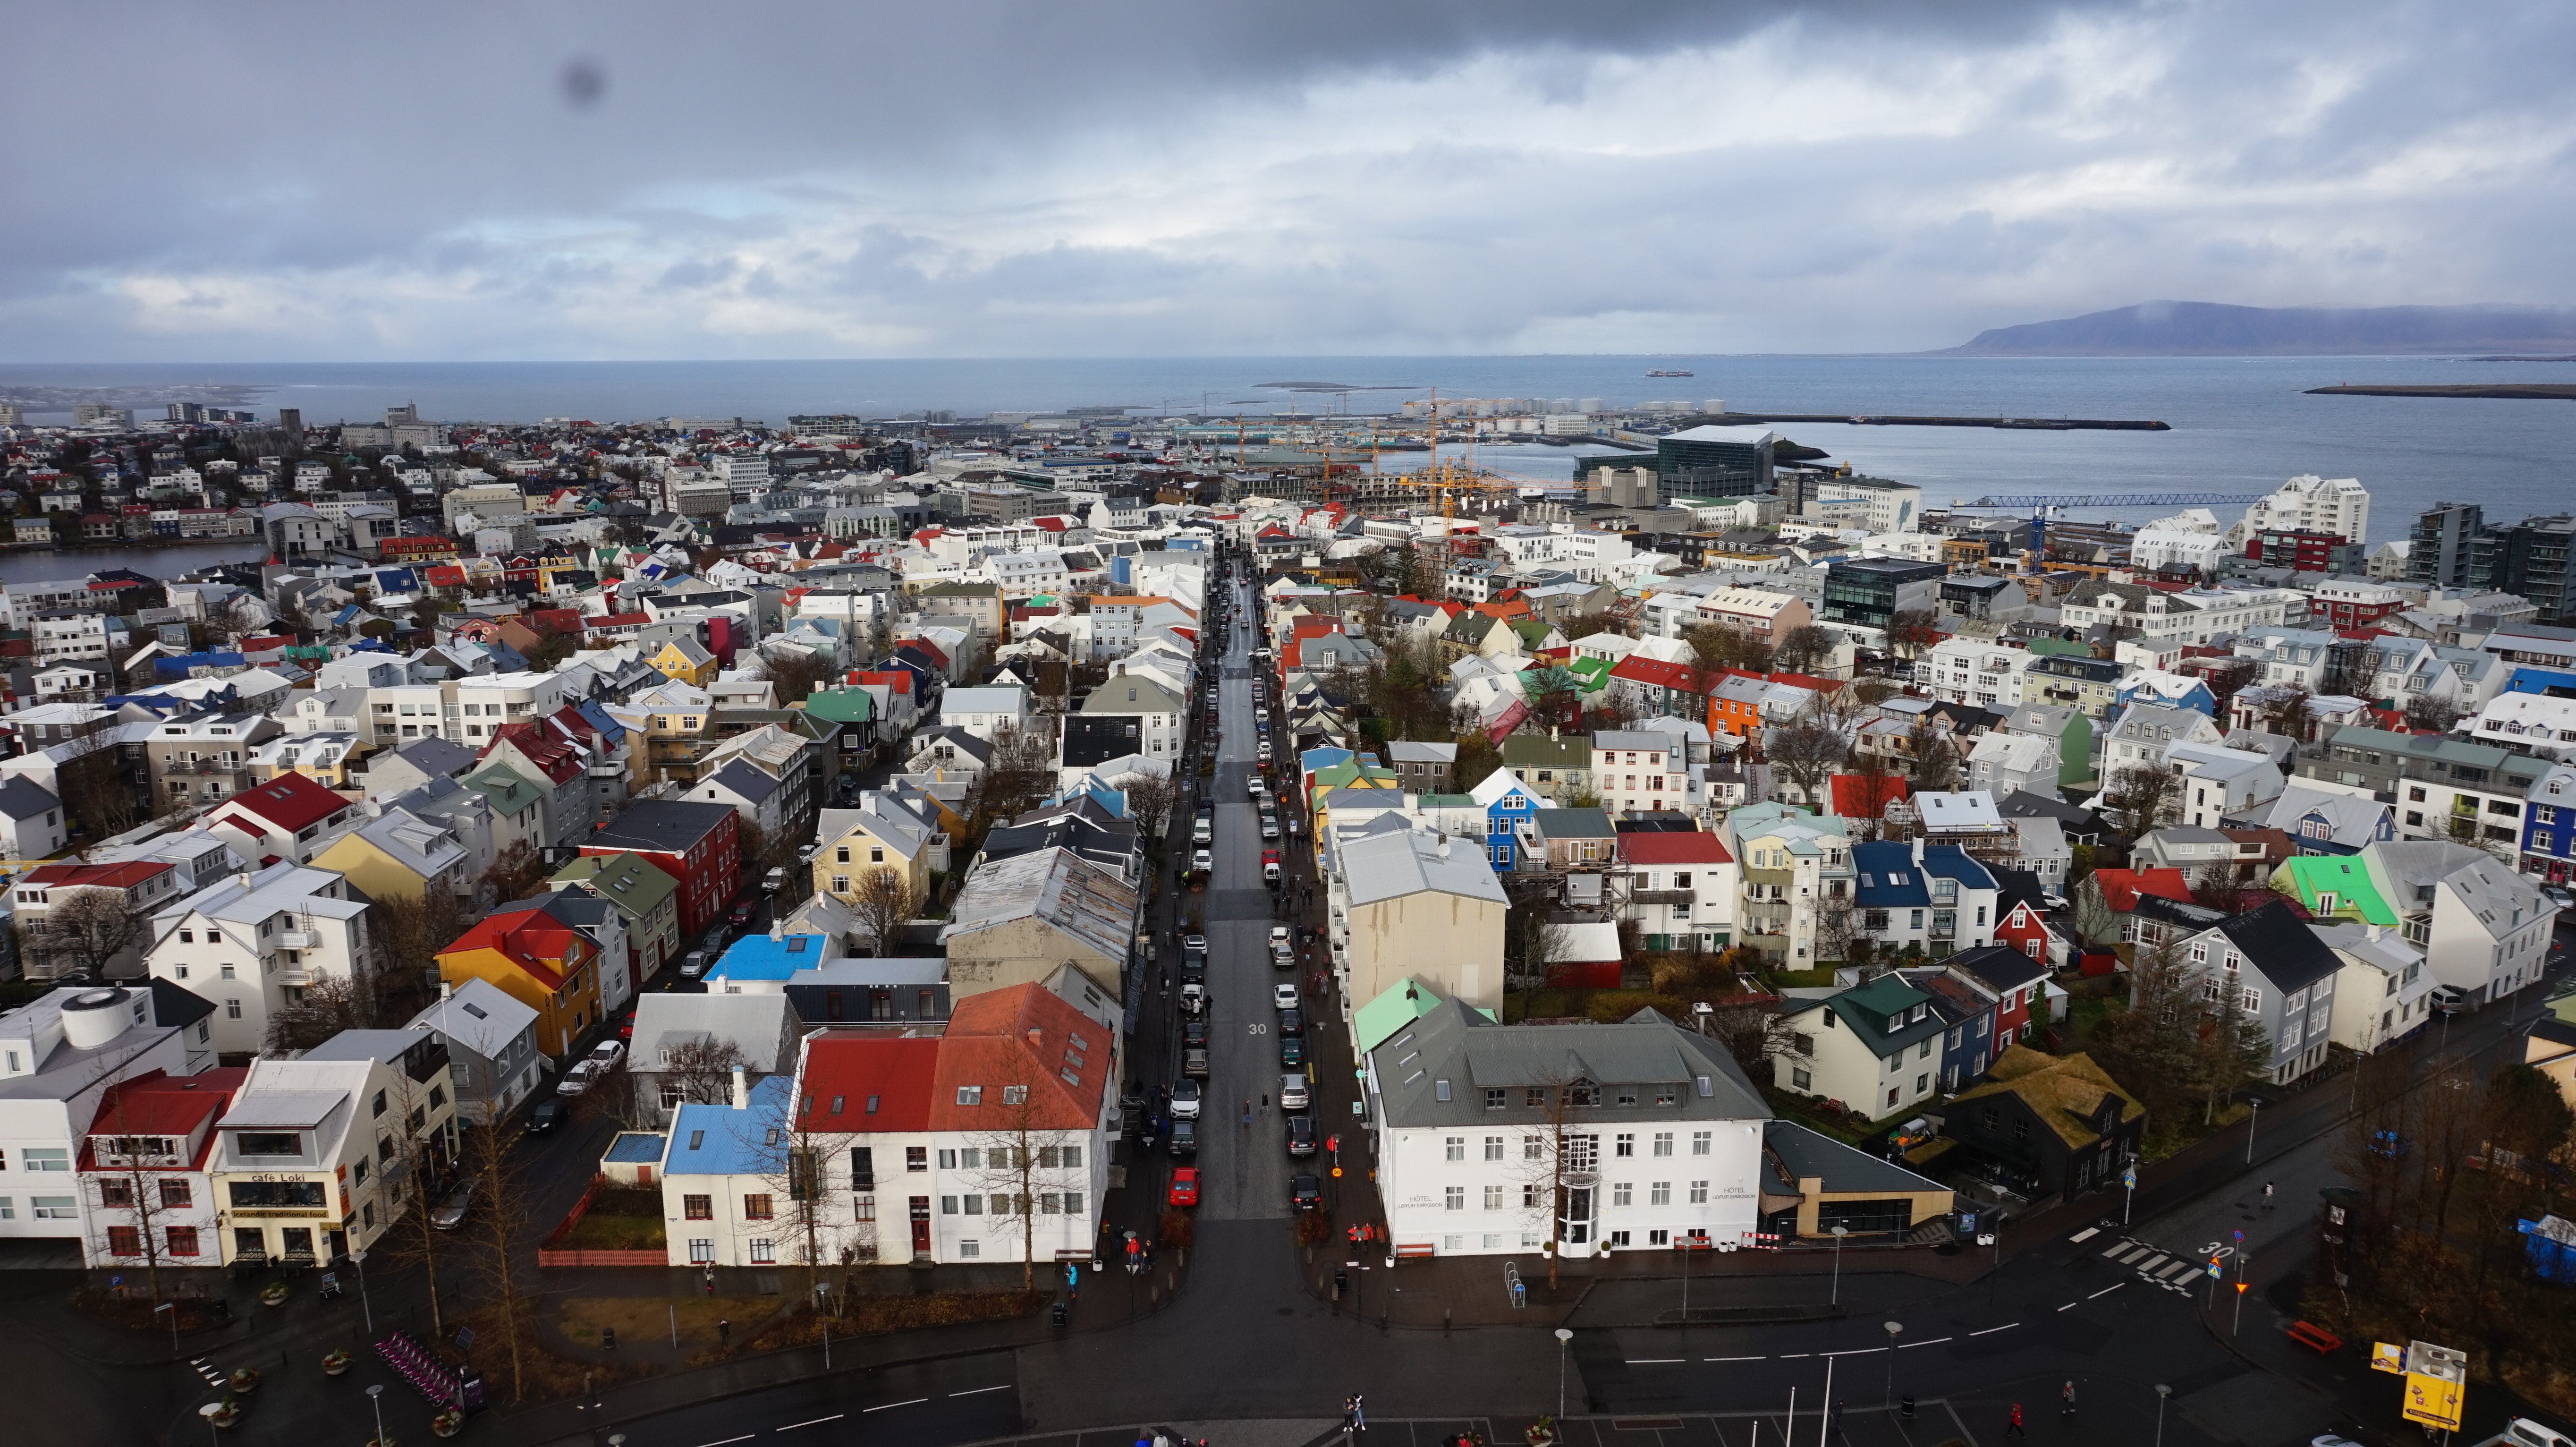 Capital of Iceland - Reykjavik